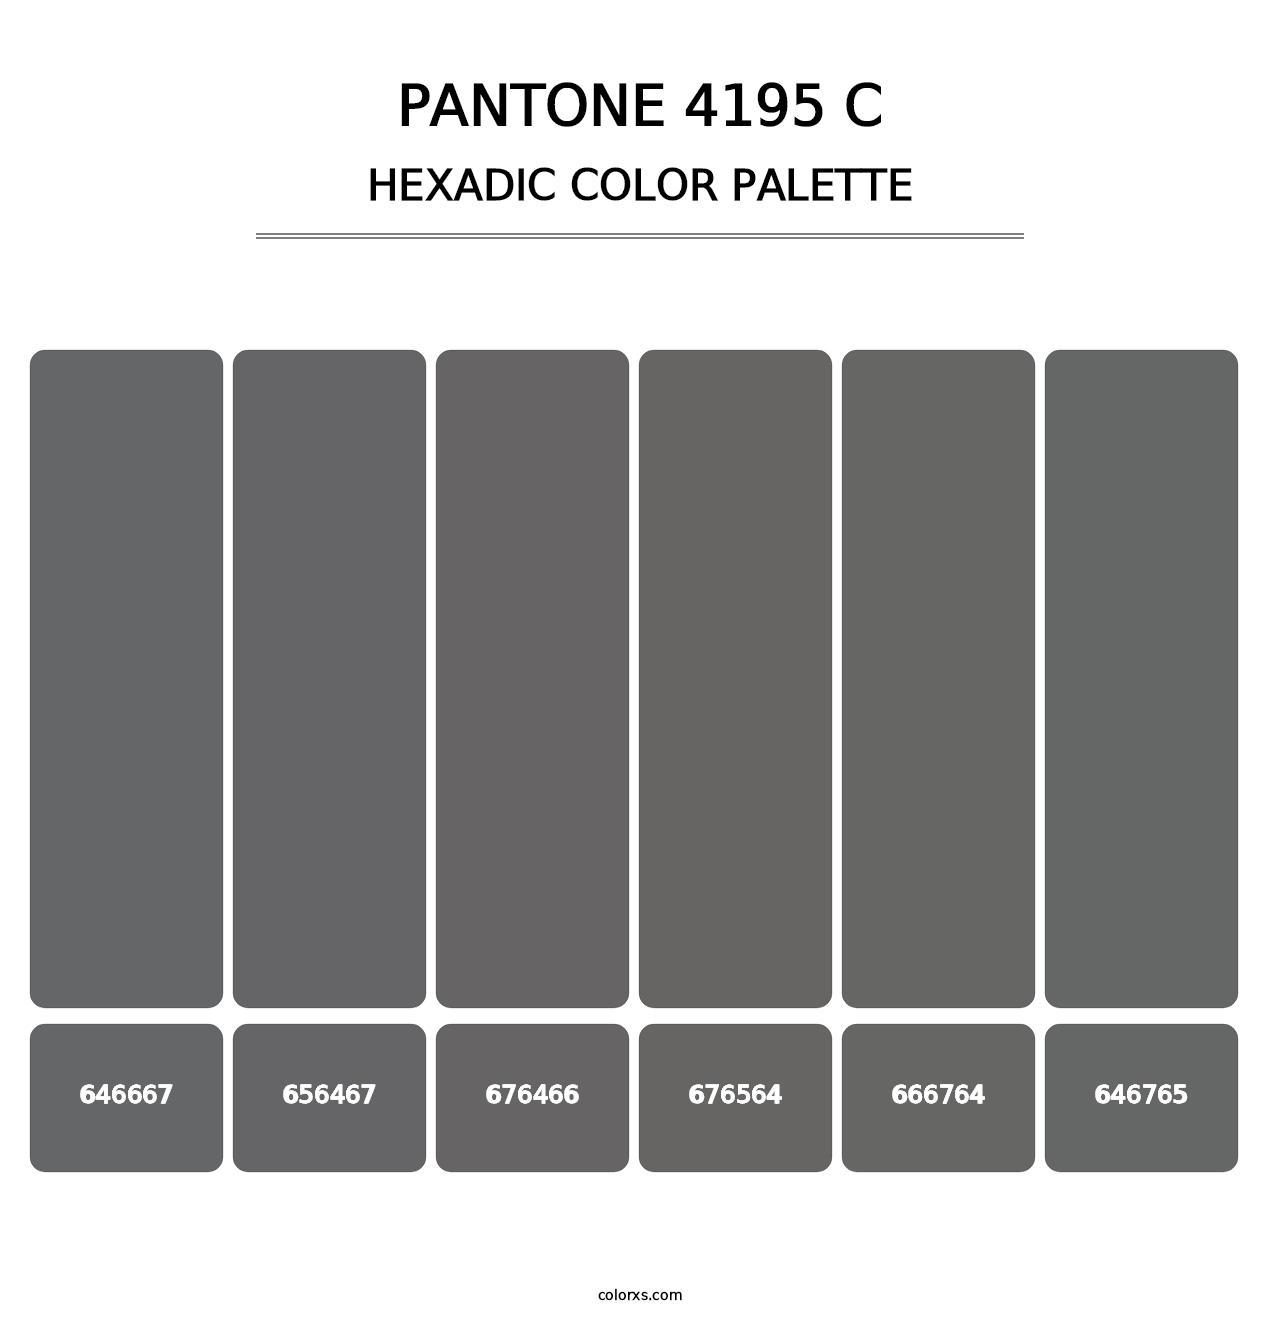 PANTONE 4195 C - Hexadic Color Palette